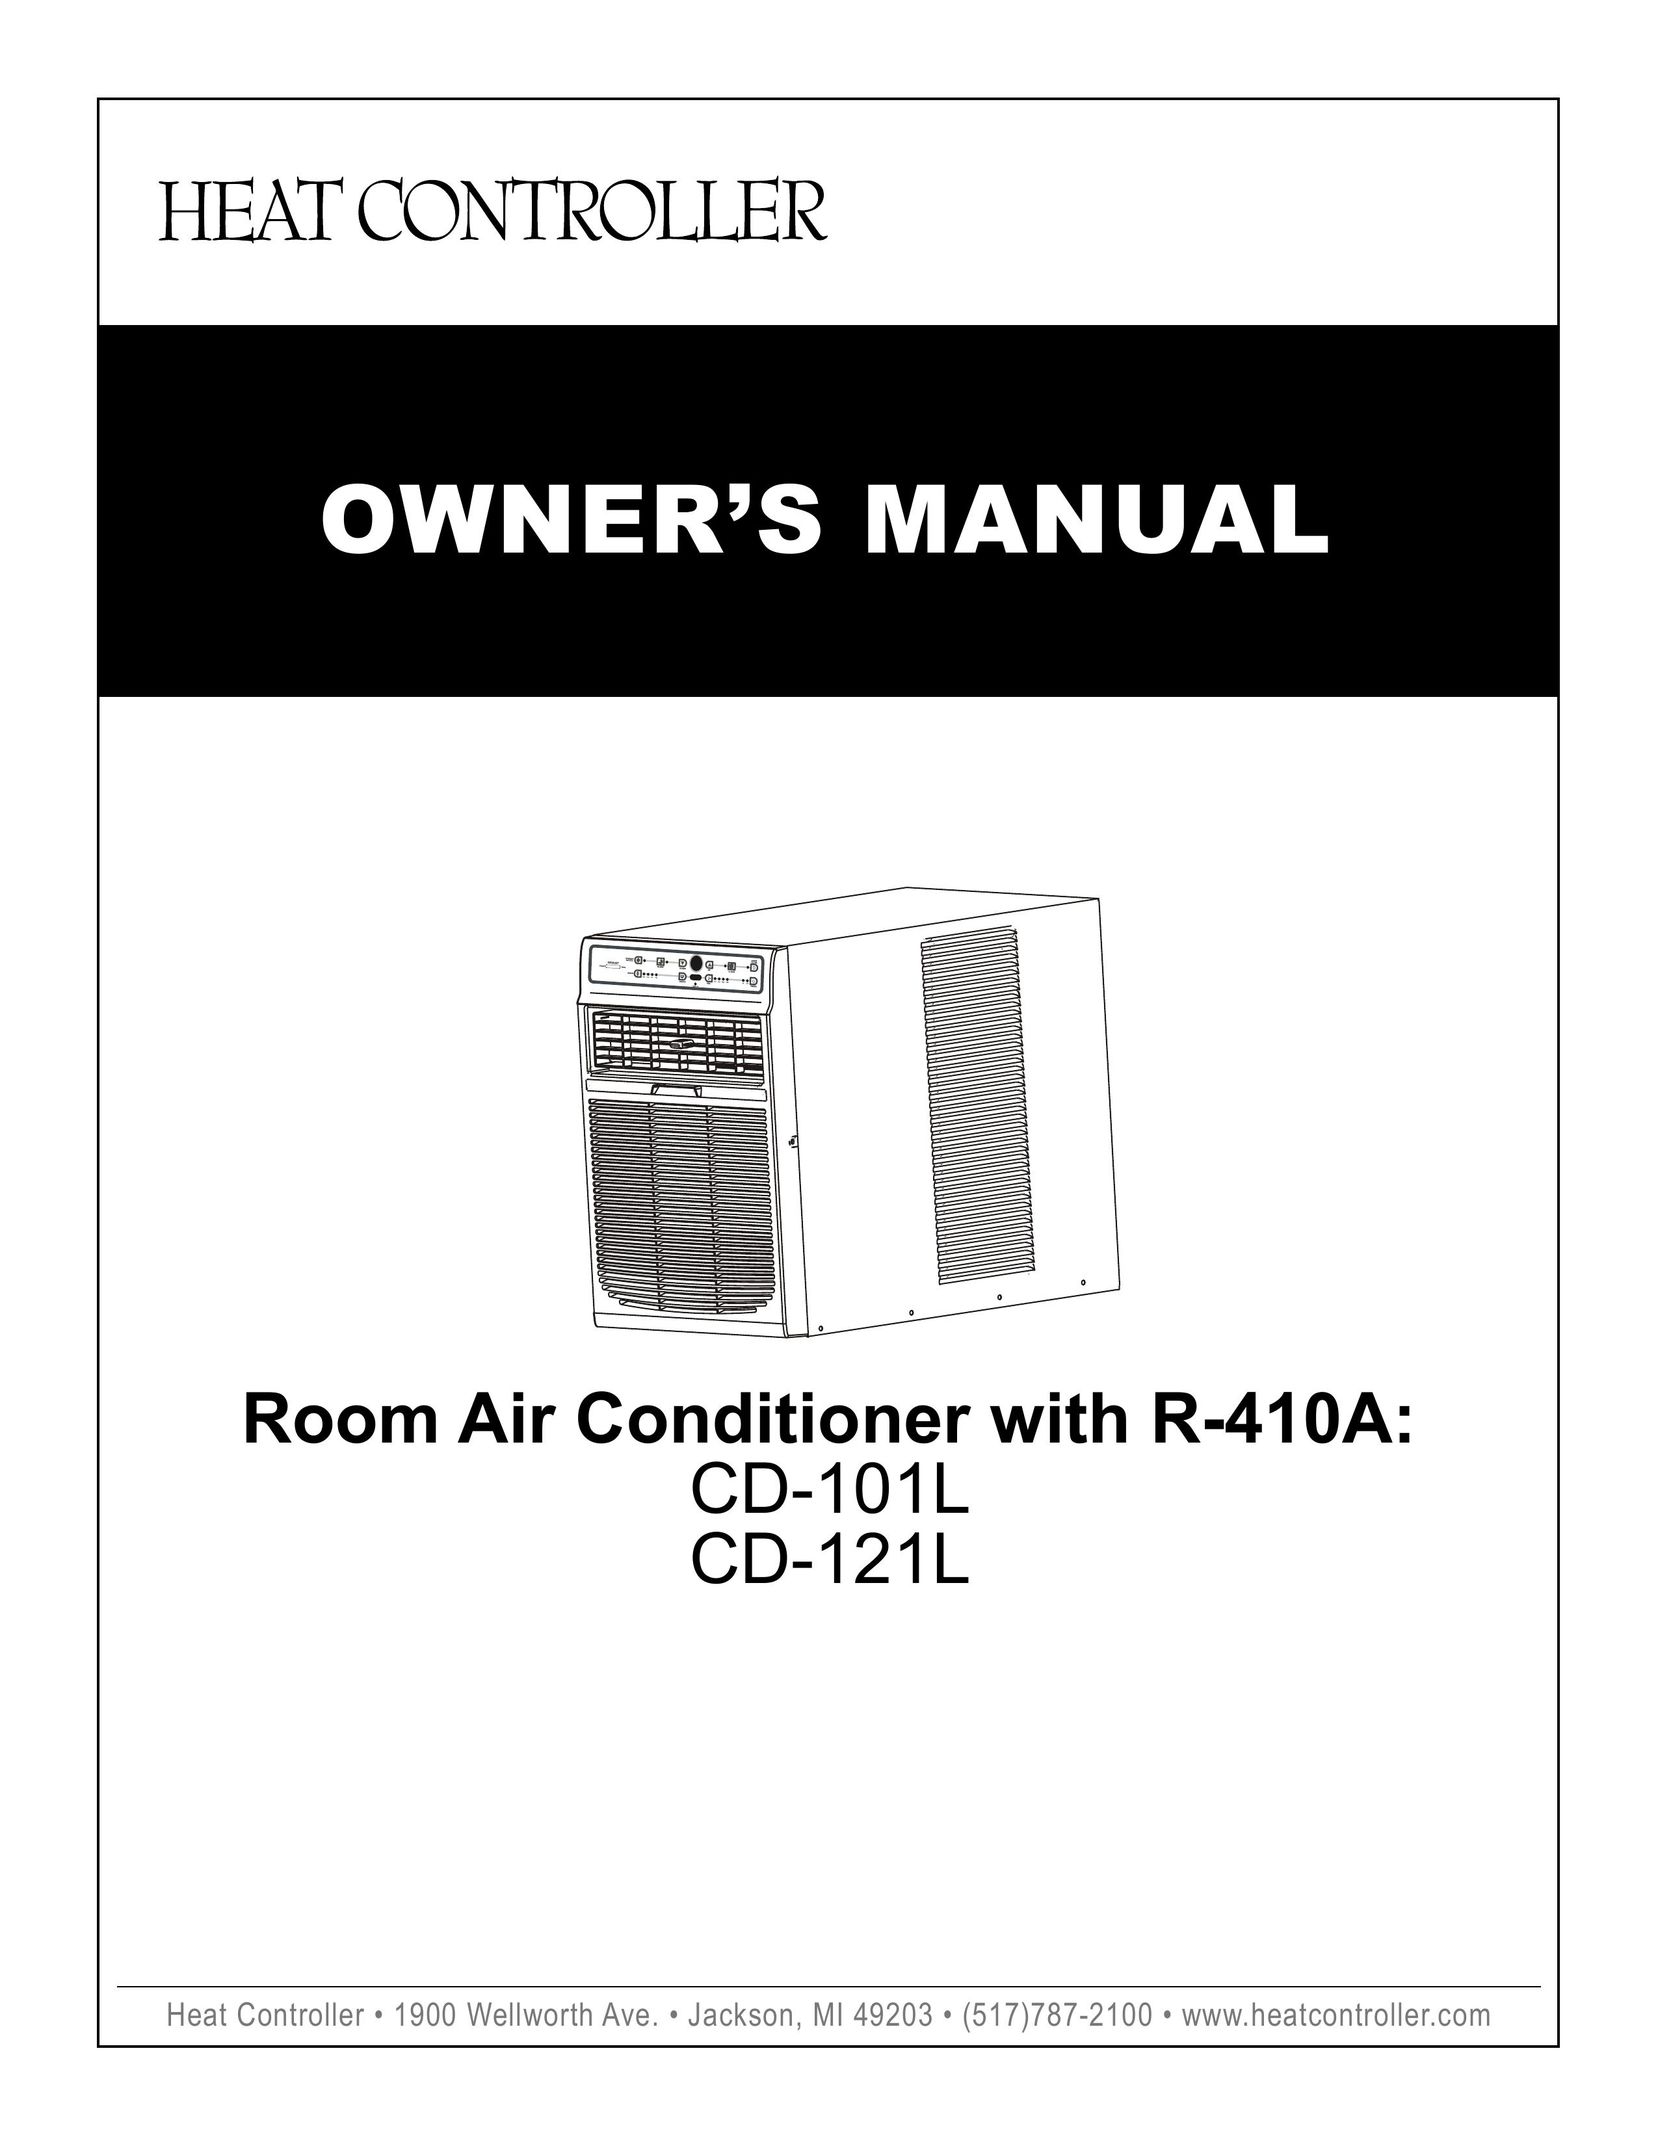 Heat Controller CD-101J Air Conditioner User Manual